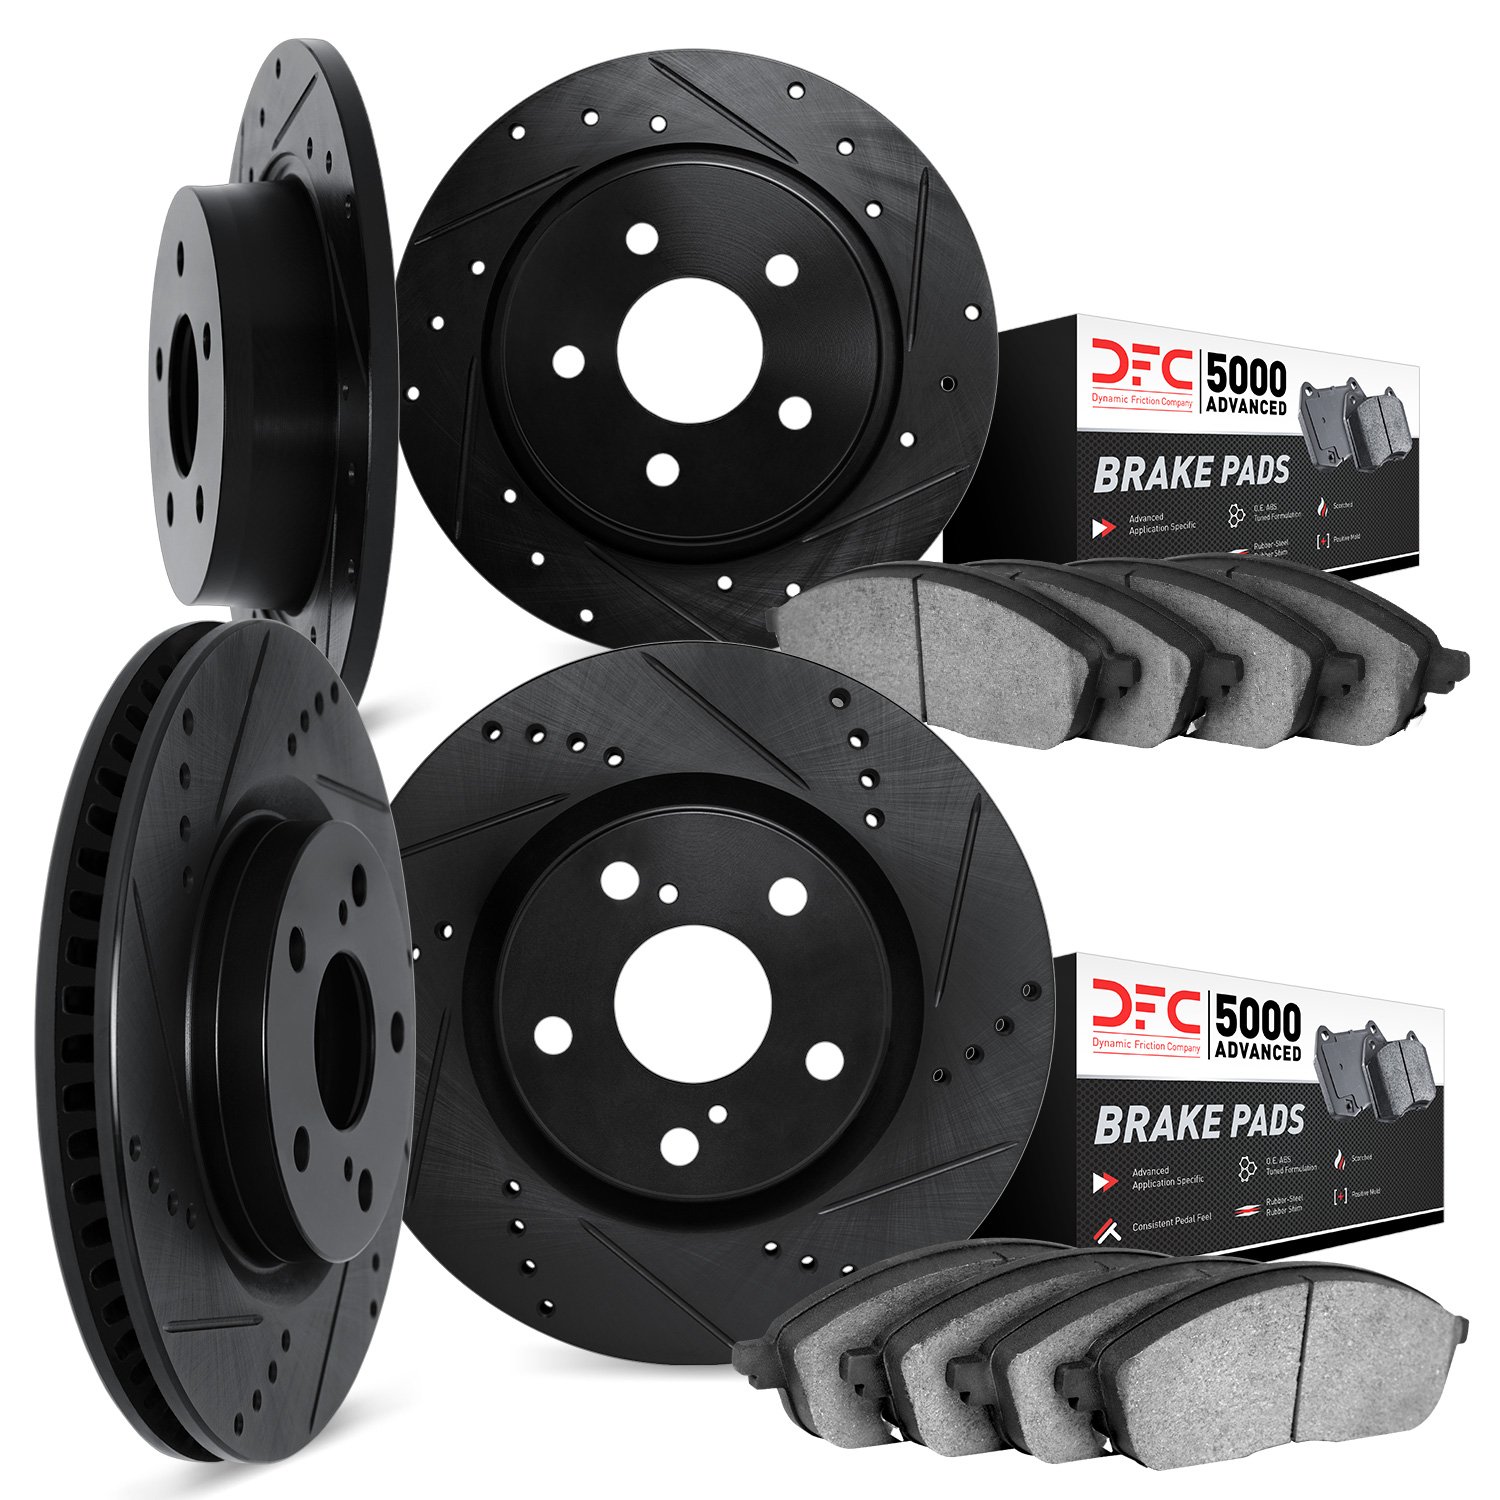 8504-40235 Drilled/Slotted Brake Rotors w/5000 Advanced Brake Pads Kit [Black], 2001-2007 Mopar, Position: Front and Rear